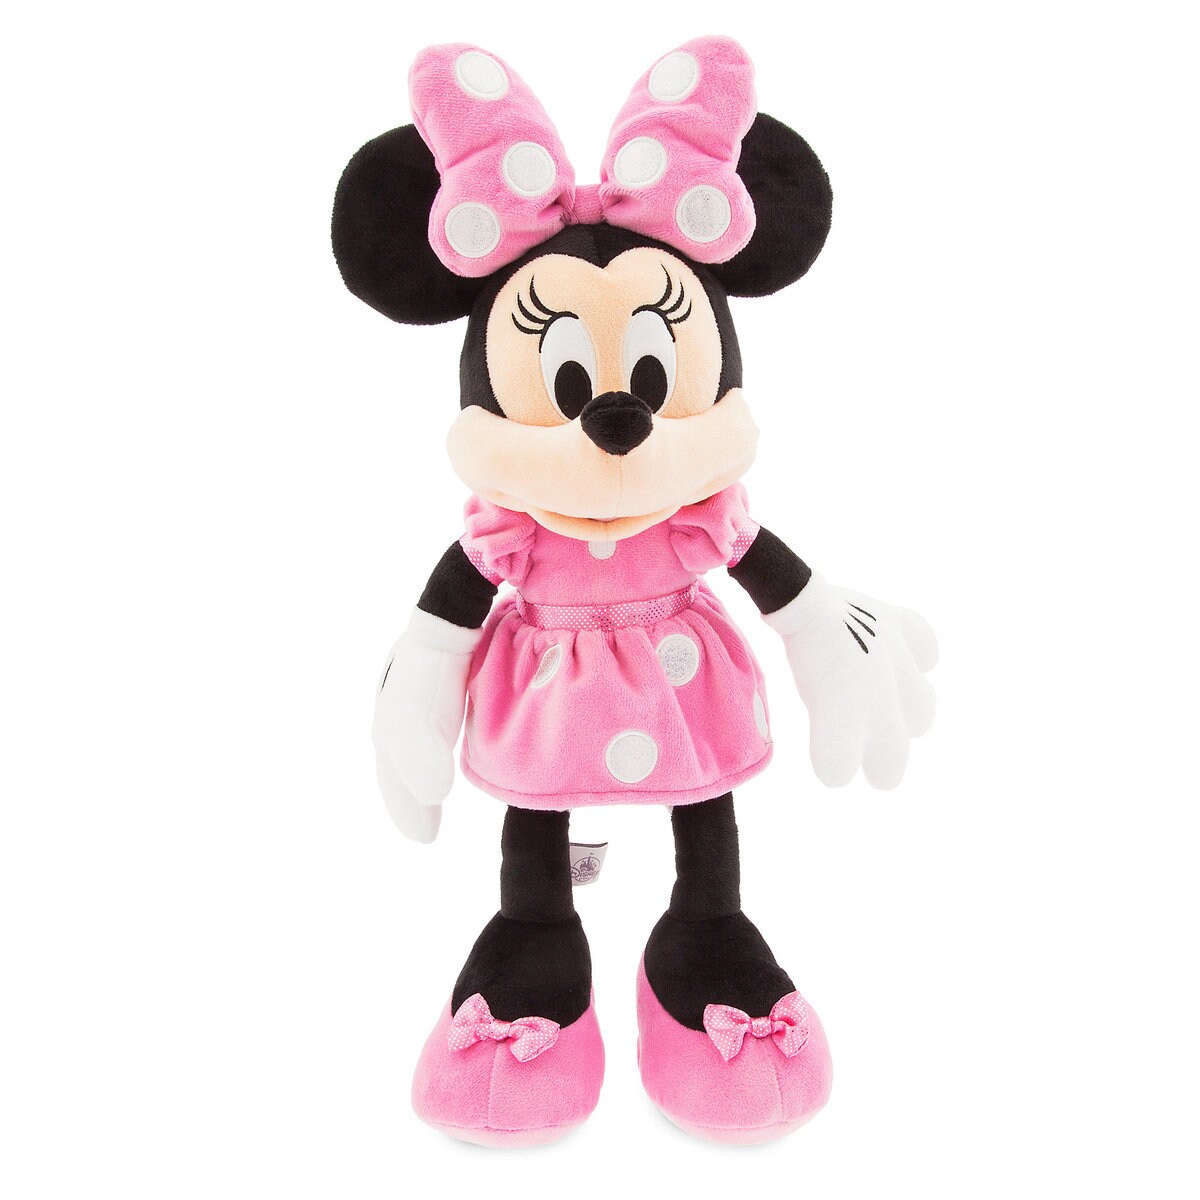 Minnie Mouse Plush - Pink - Medium - 18''